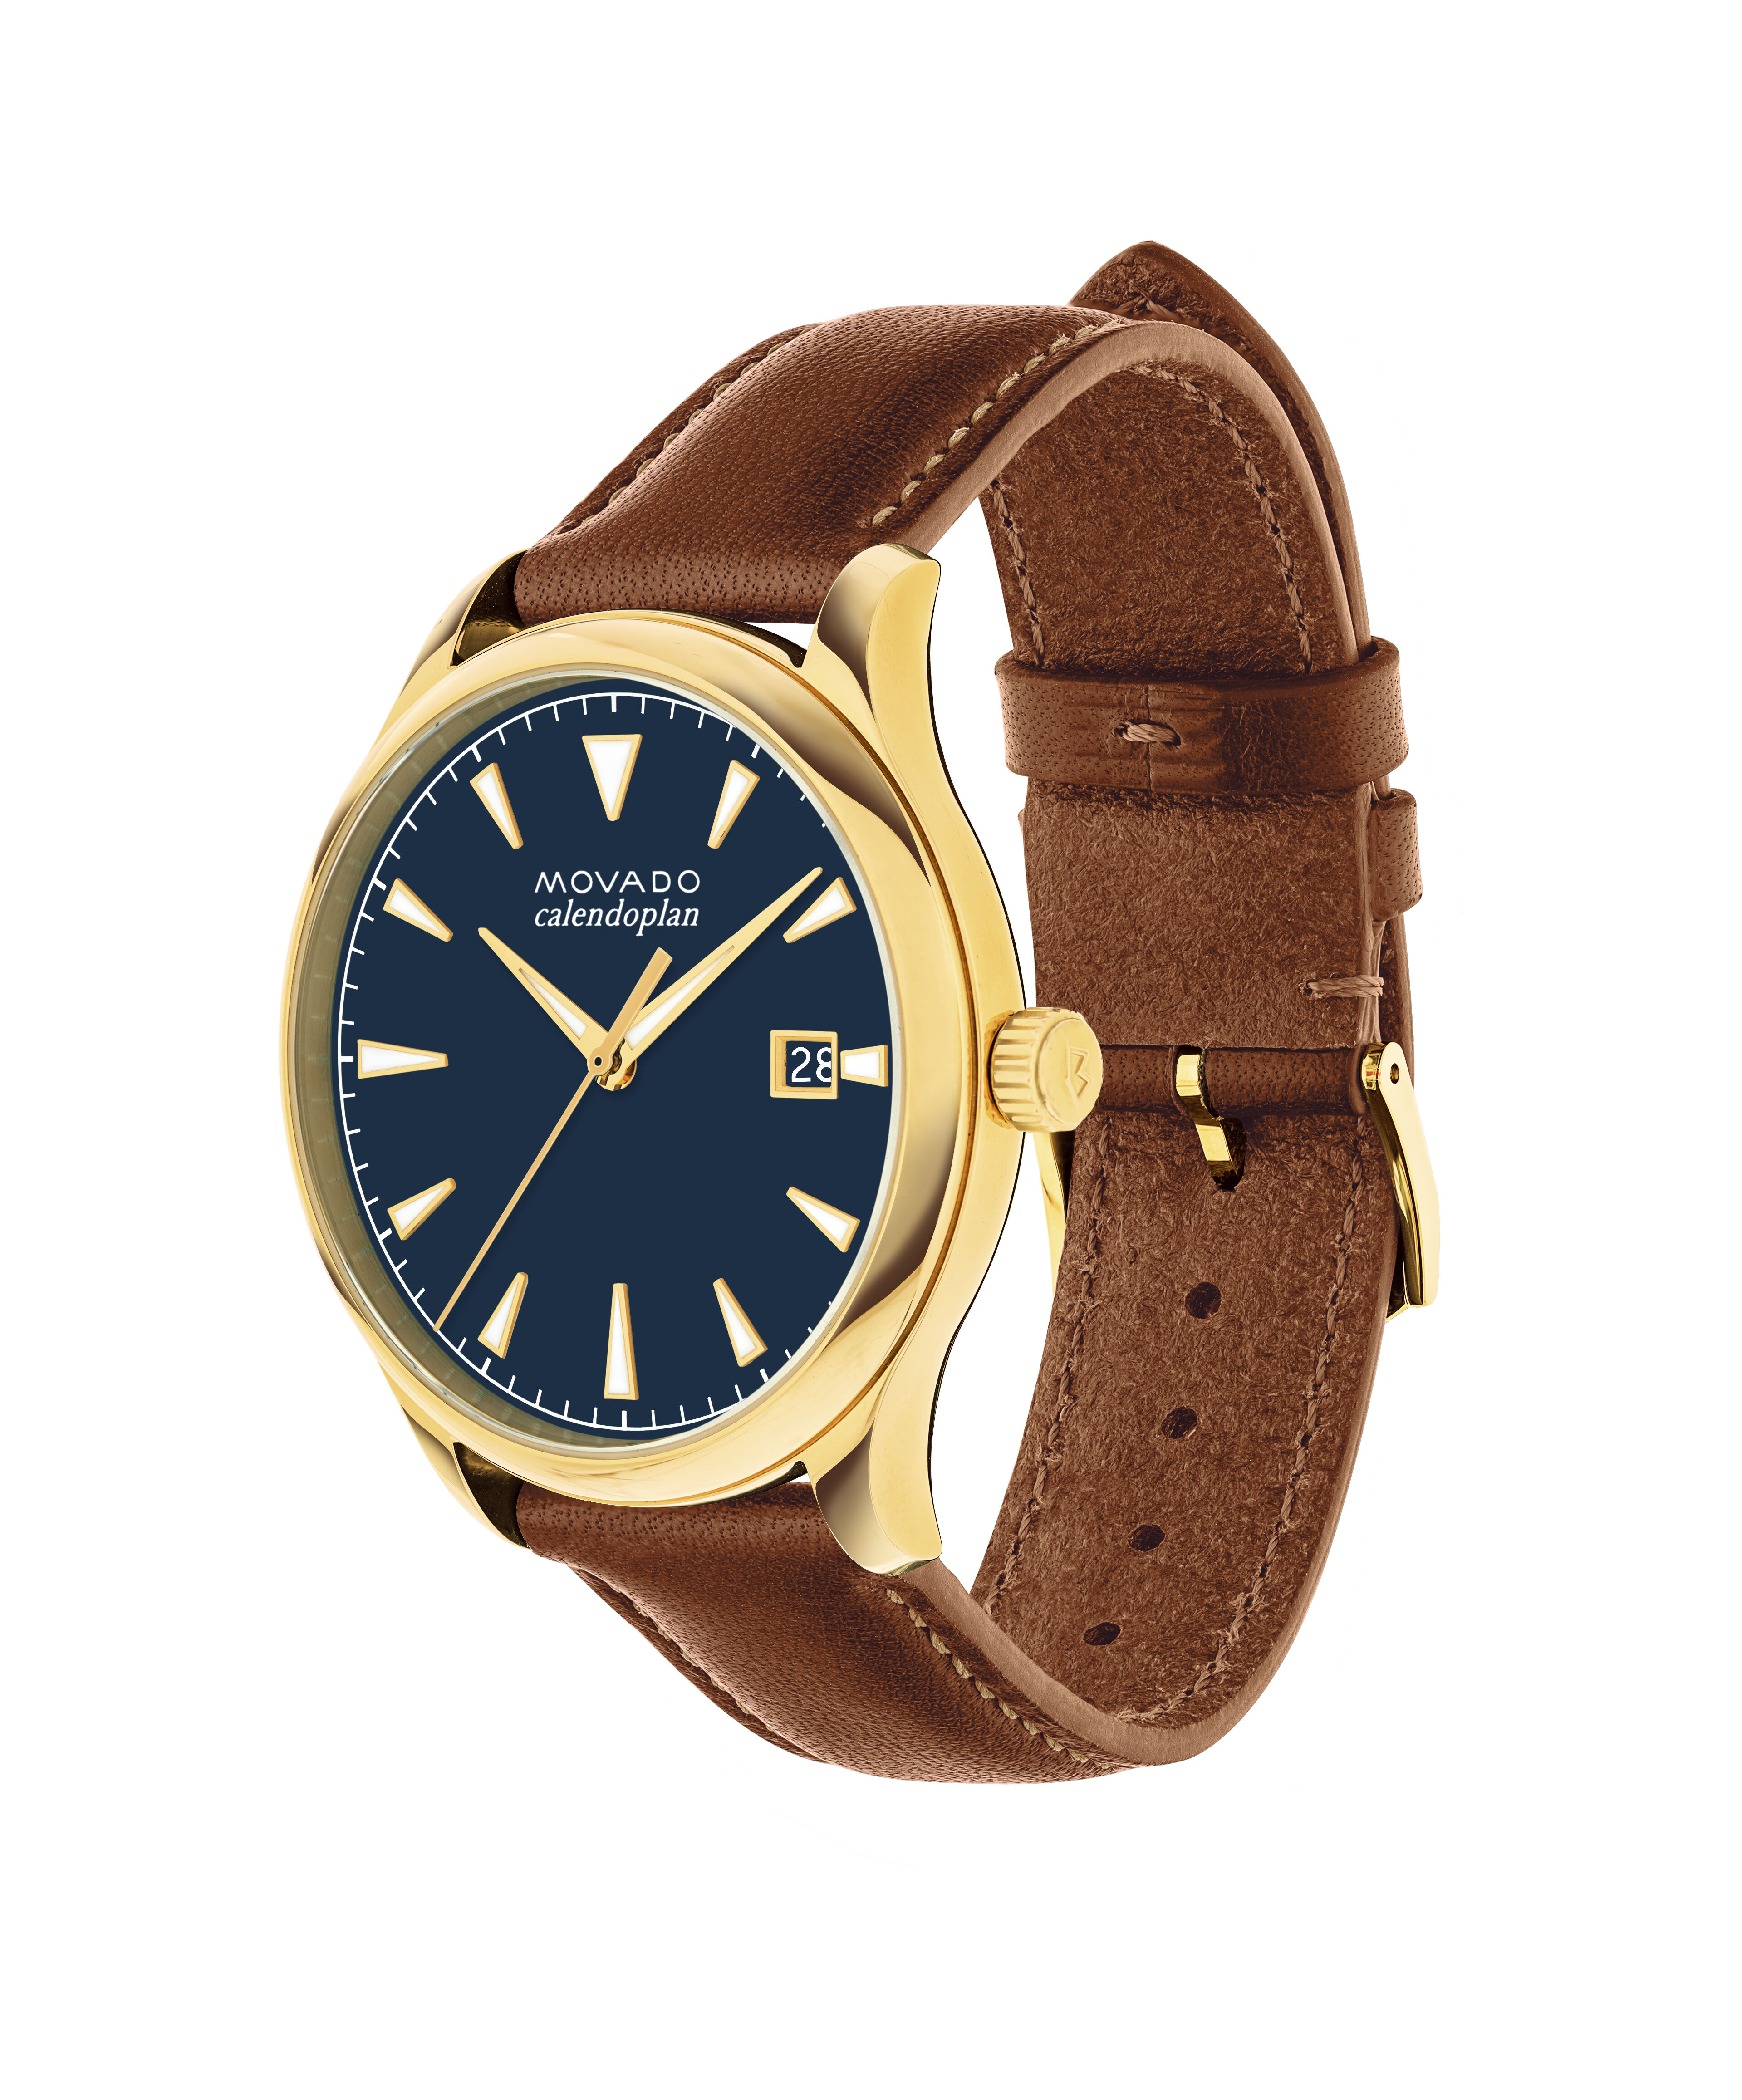 Movado Chronometre 1231 18k Yellow Gold 34mm Leather Automatic Wrist Watch